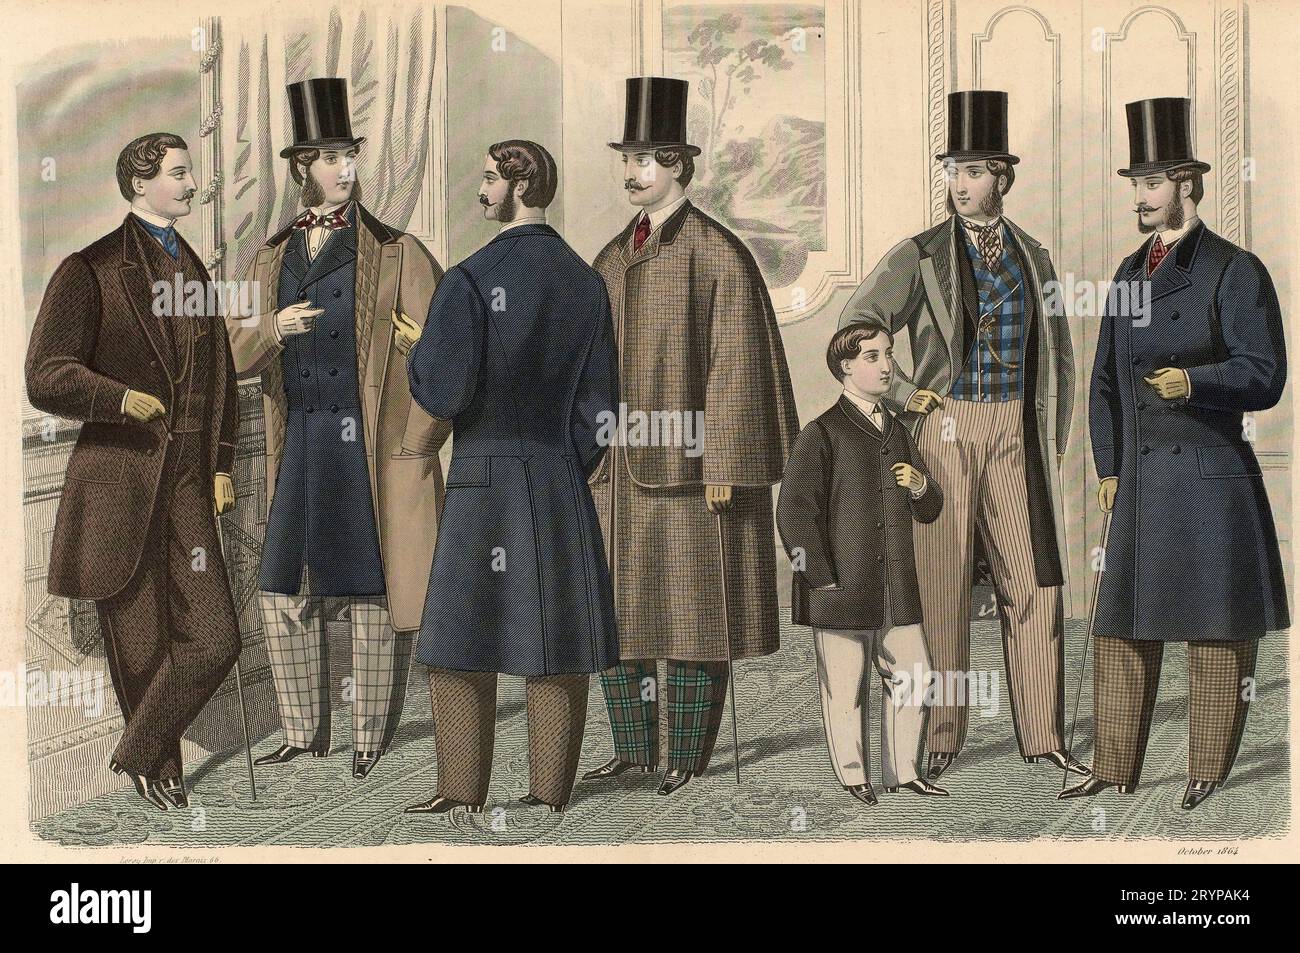 Gazette of Fashion, Oktober 1864 - Herrenmode des 19. Jahrhunderts Stockfoto